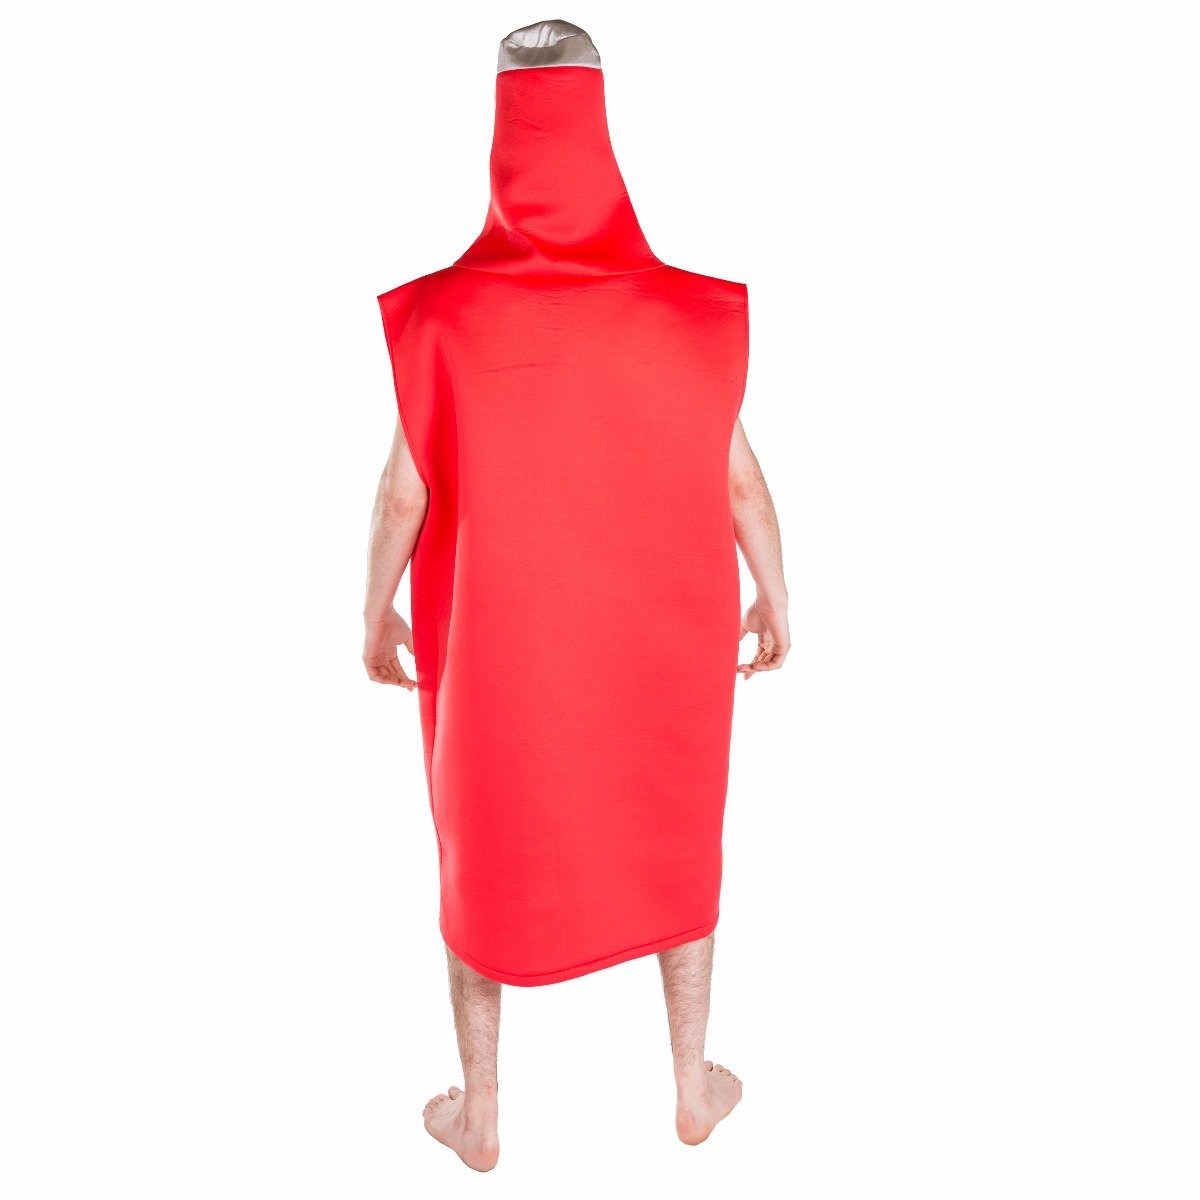 Bodysocks - Ketchup Costume